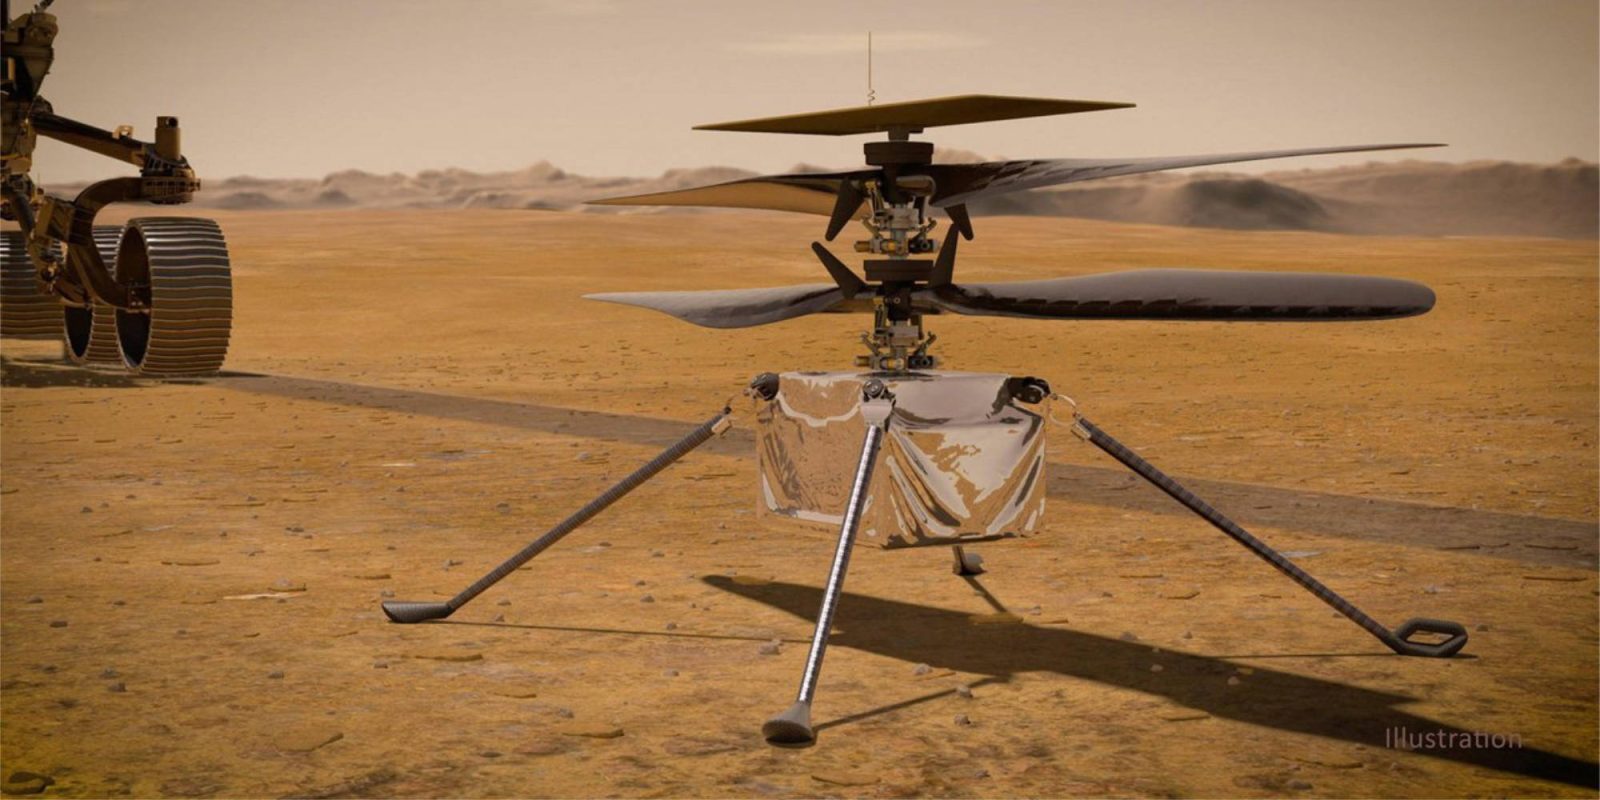 NASA's Ingenuity Mars drone